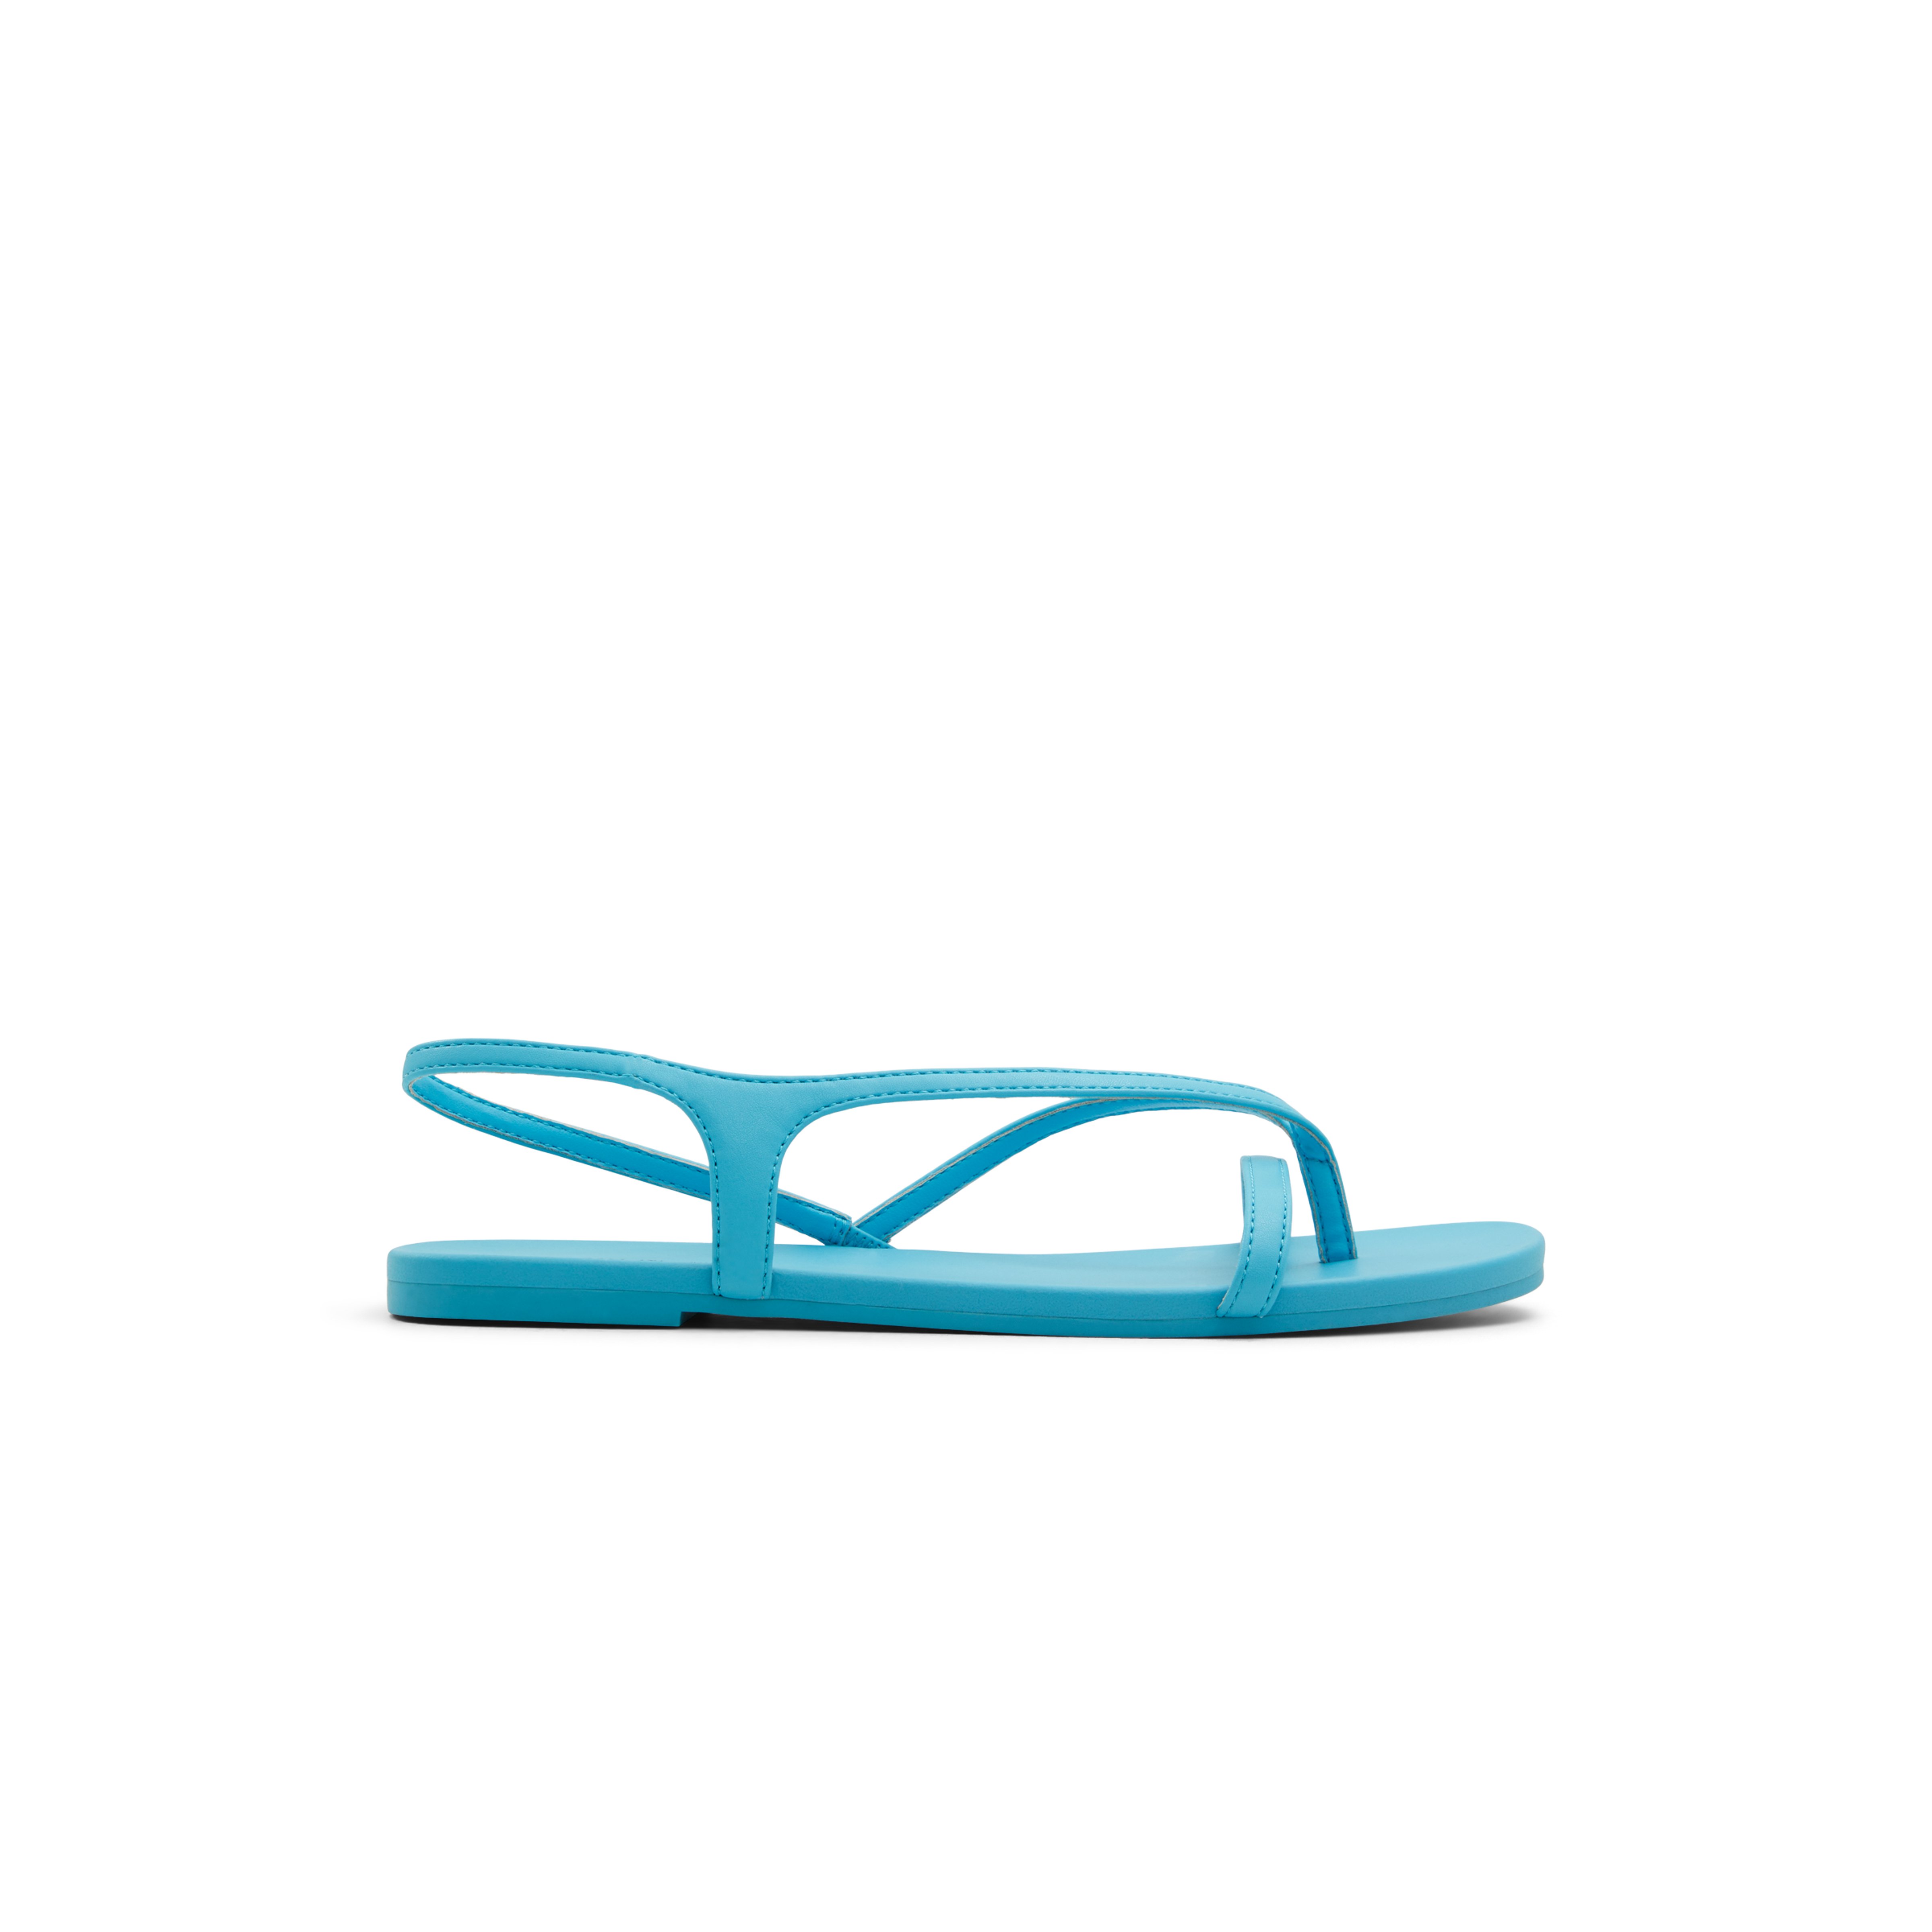 Montebello Women's Blue Flat Sandals